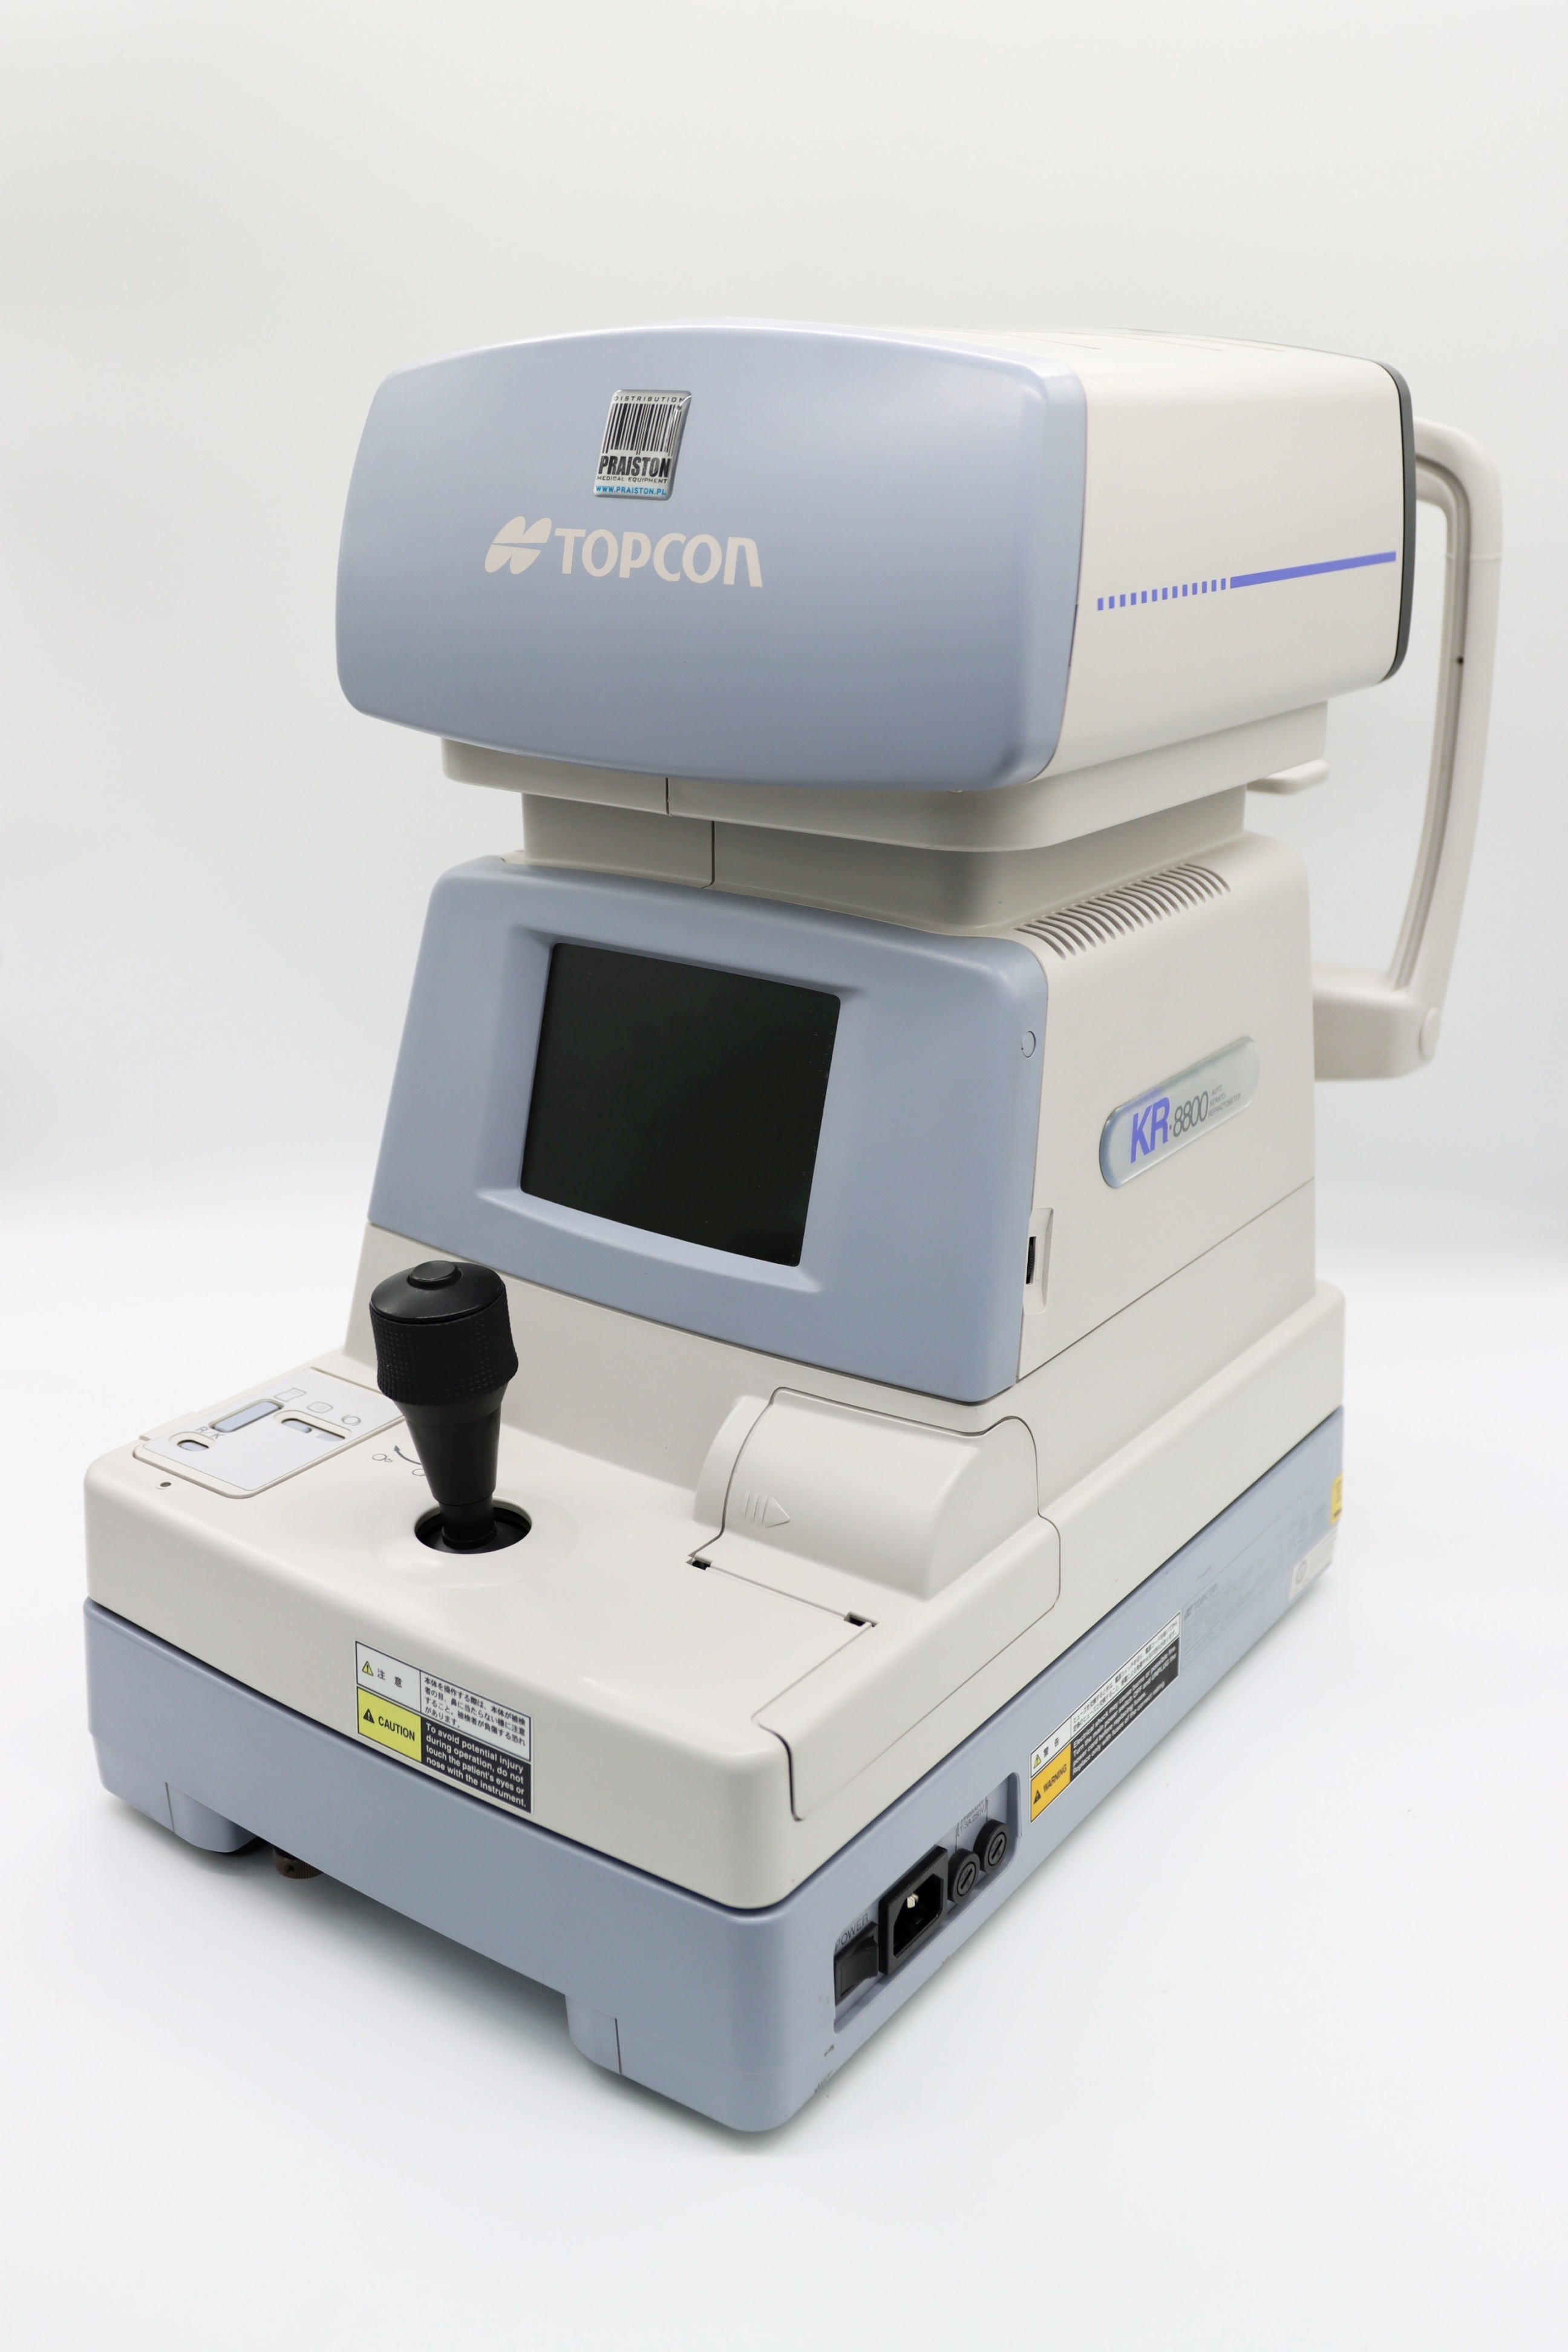 Autorefraktometry (autokeratorefraktometry) używane Topcon KR-8800 - Praiston rekondycjonowany